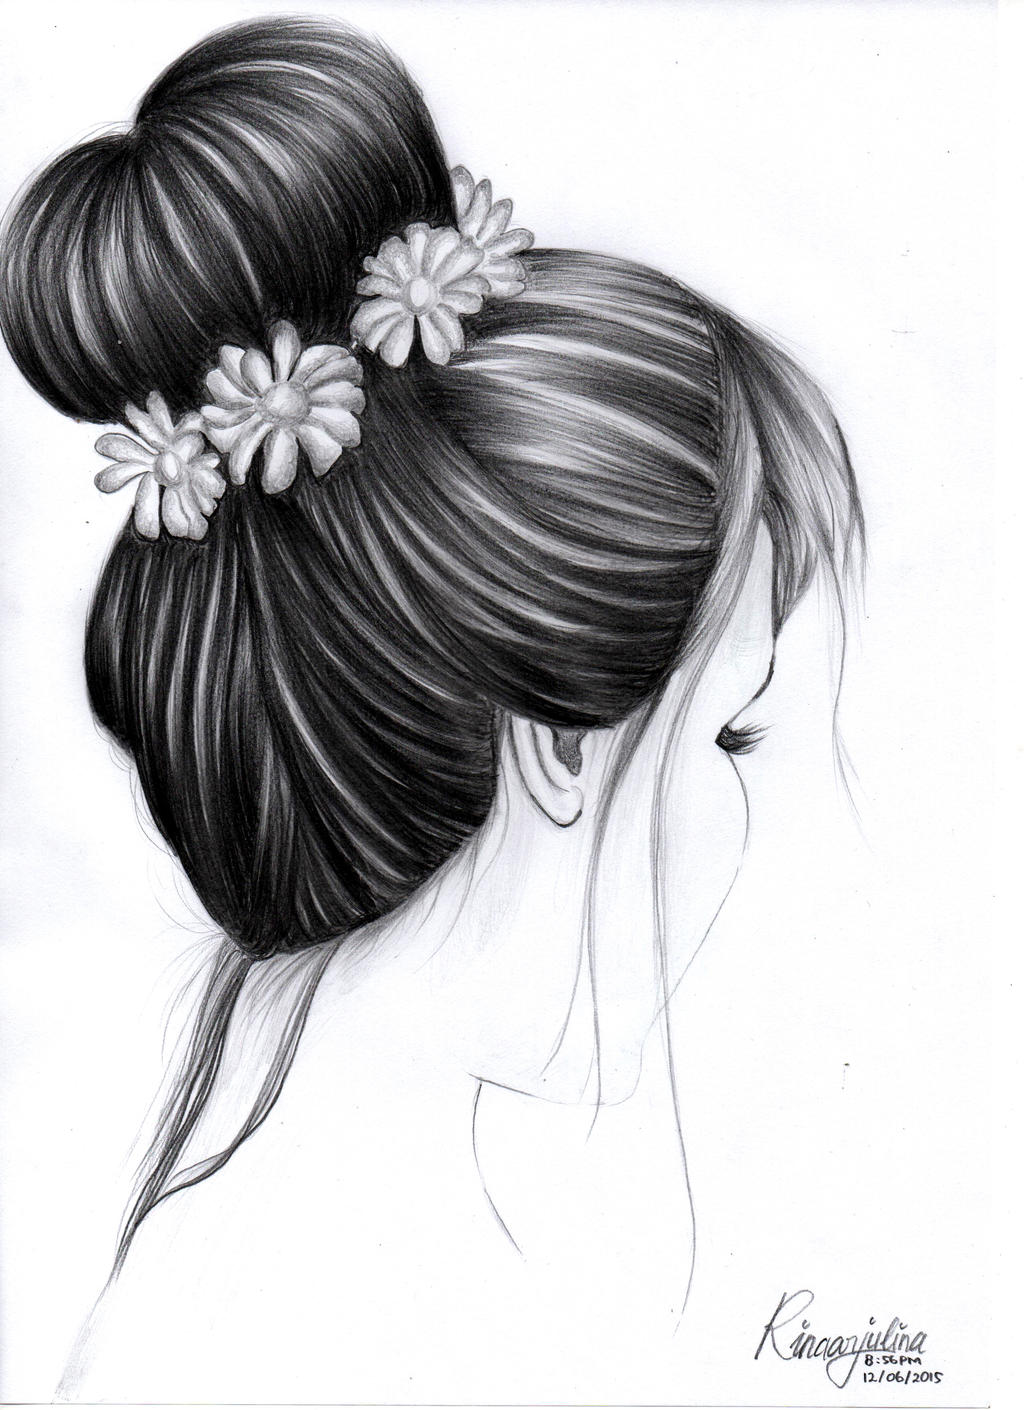 Hair (sketch) by rinaarjulina10 on DeviantArt